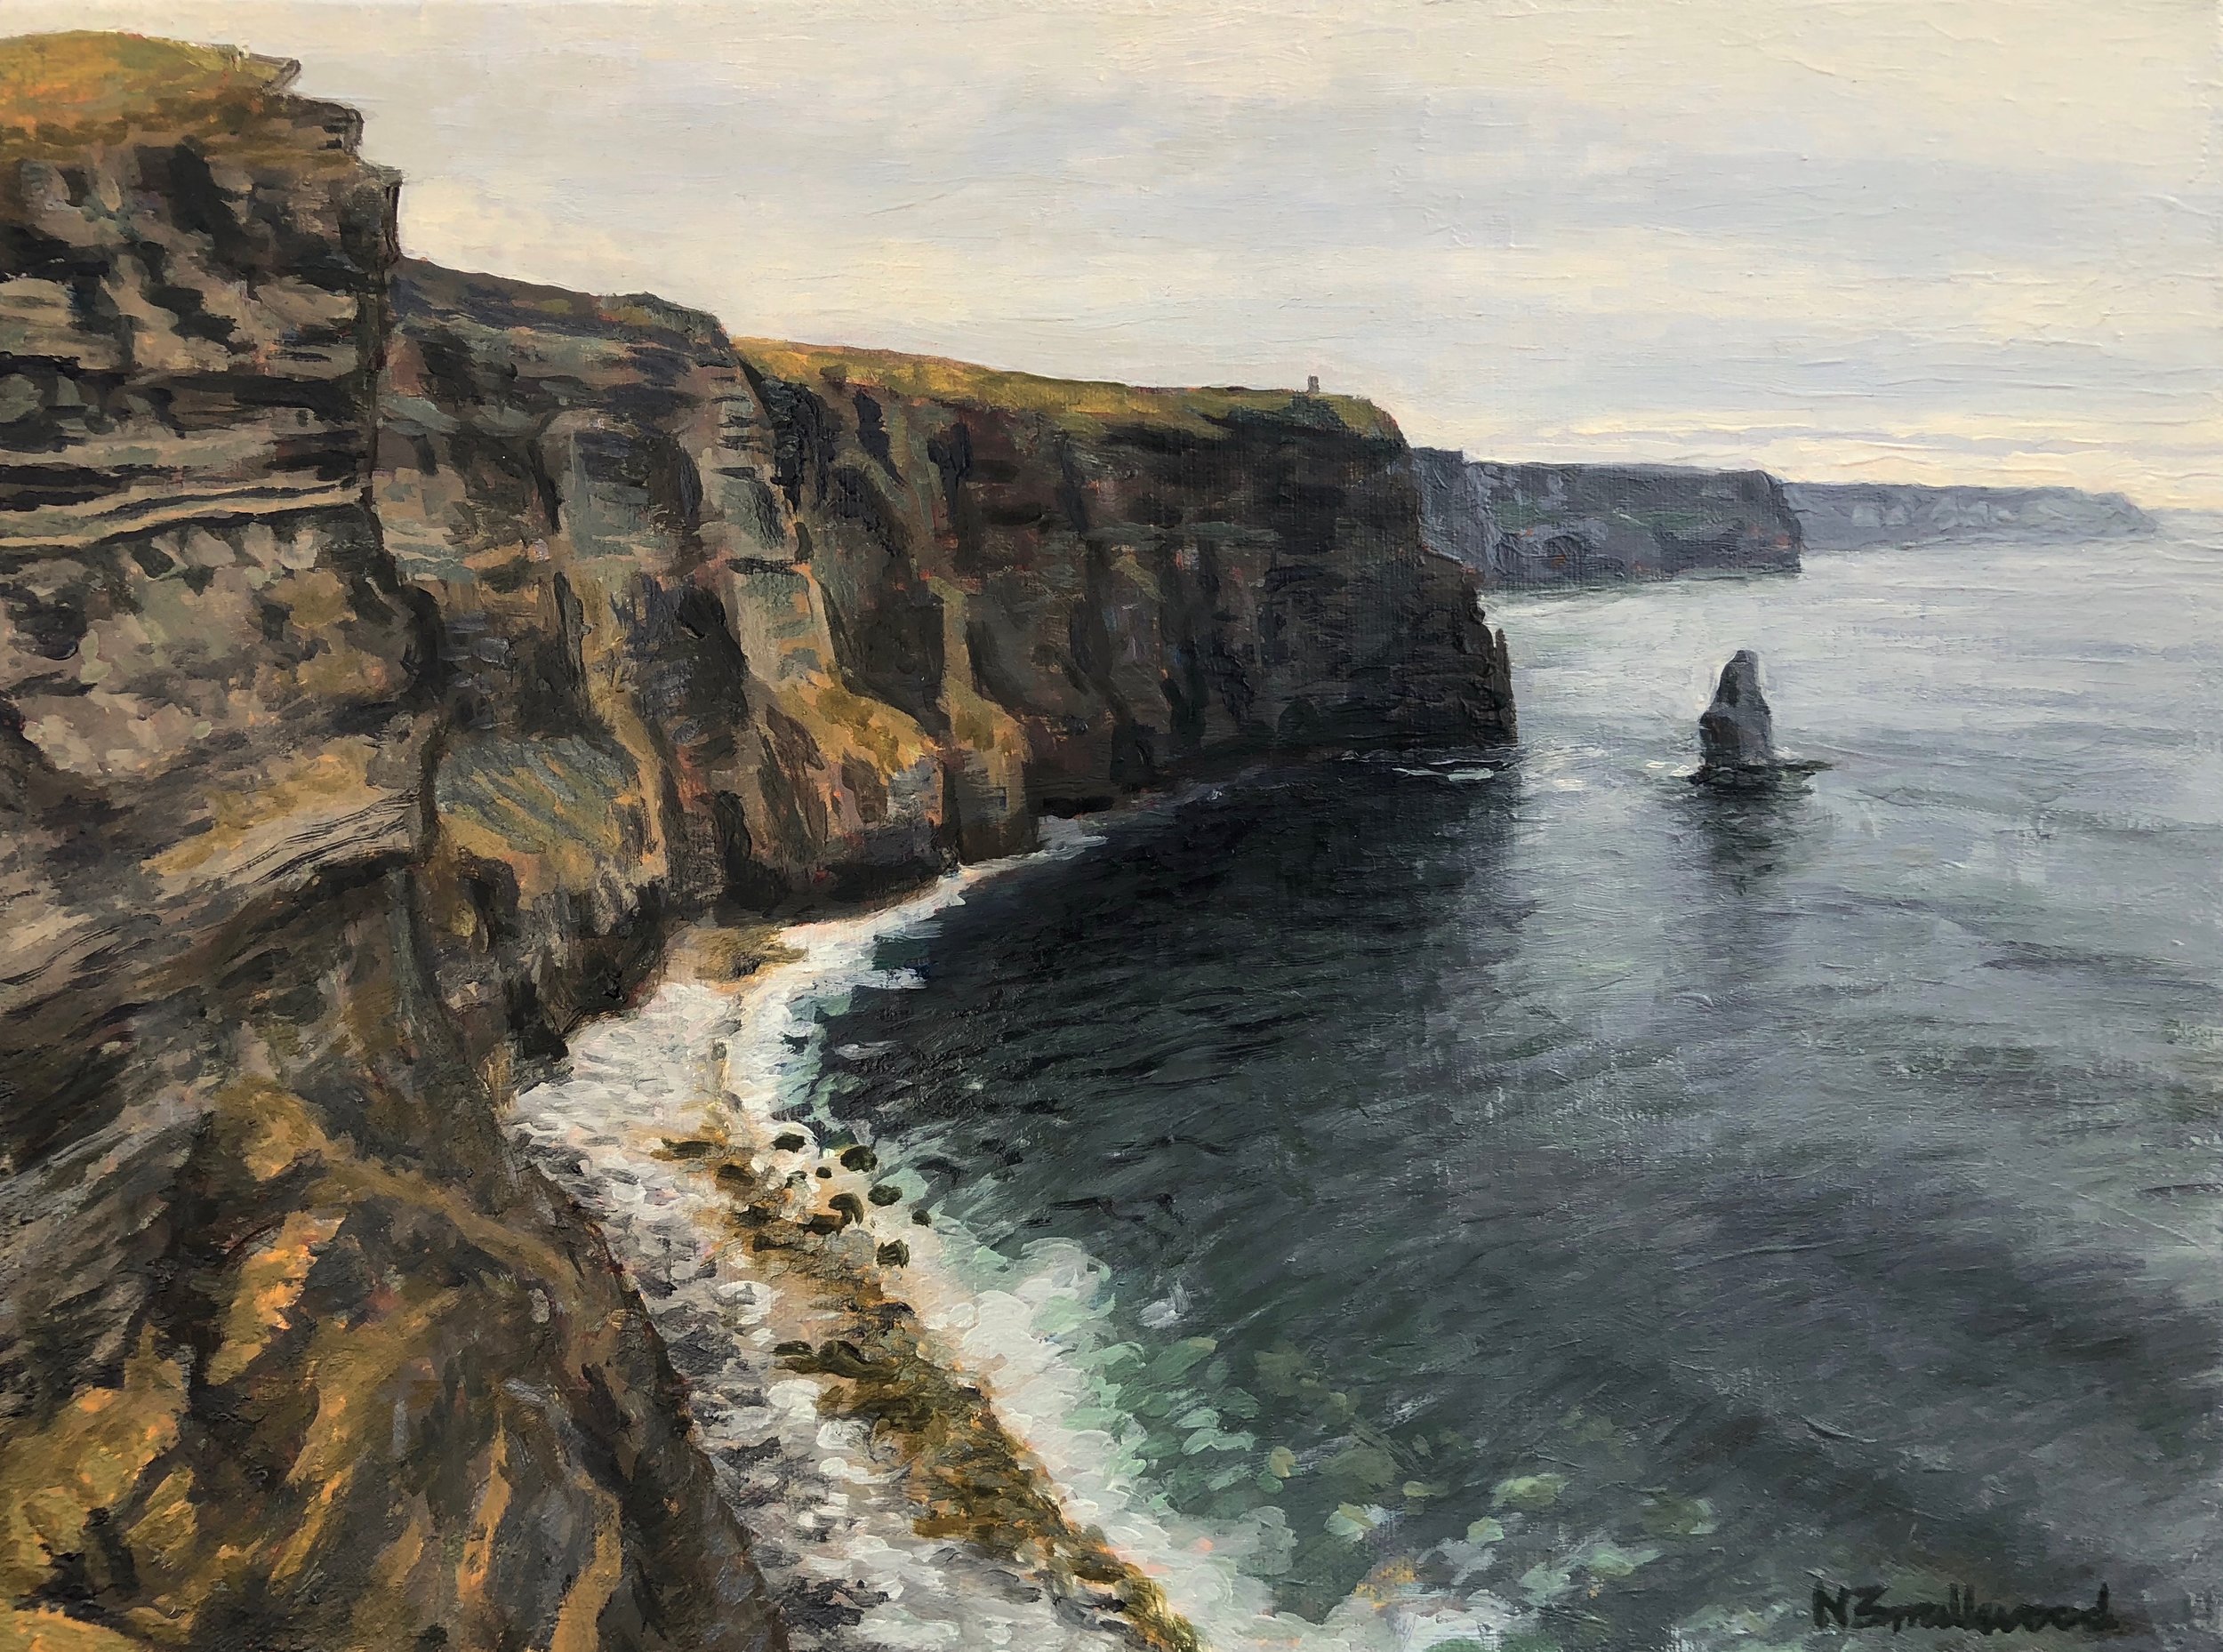    Black Cliffside, 2018  Oil on canvas  12 in x 16 in   